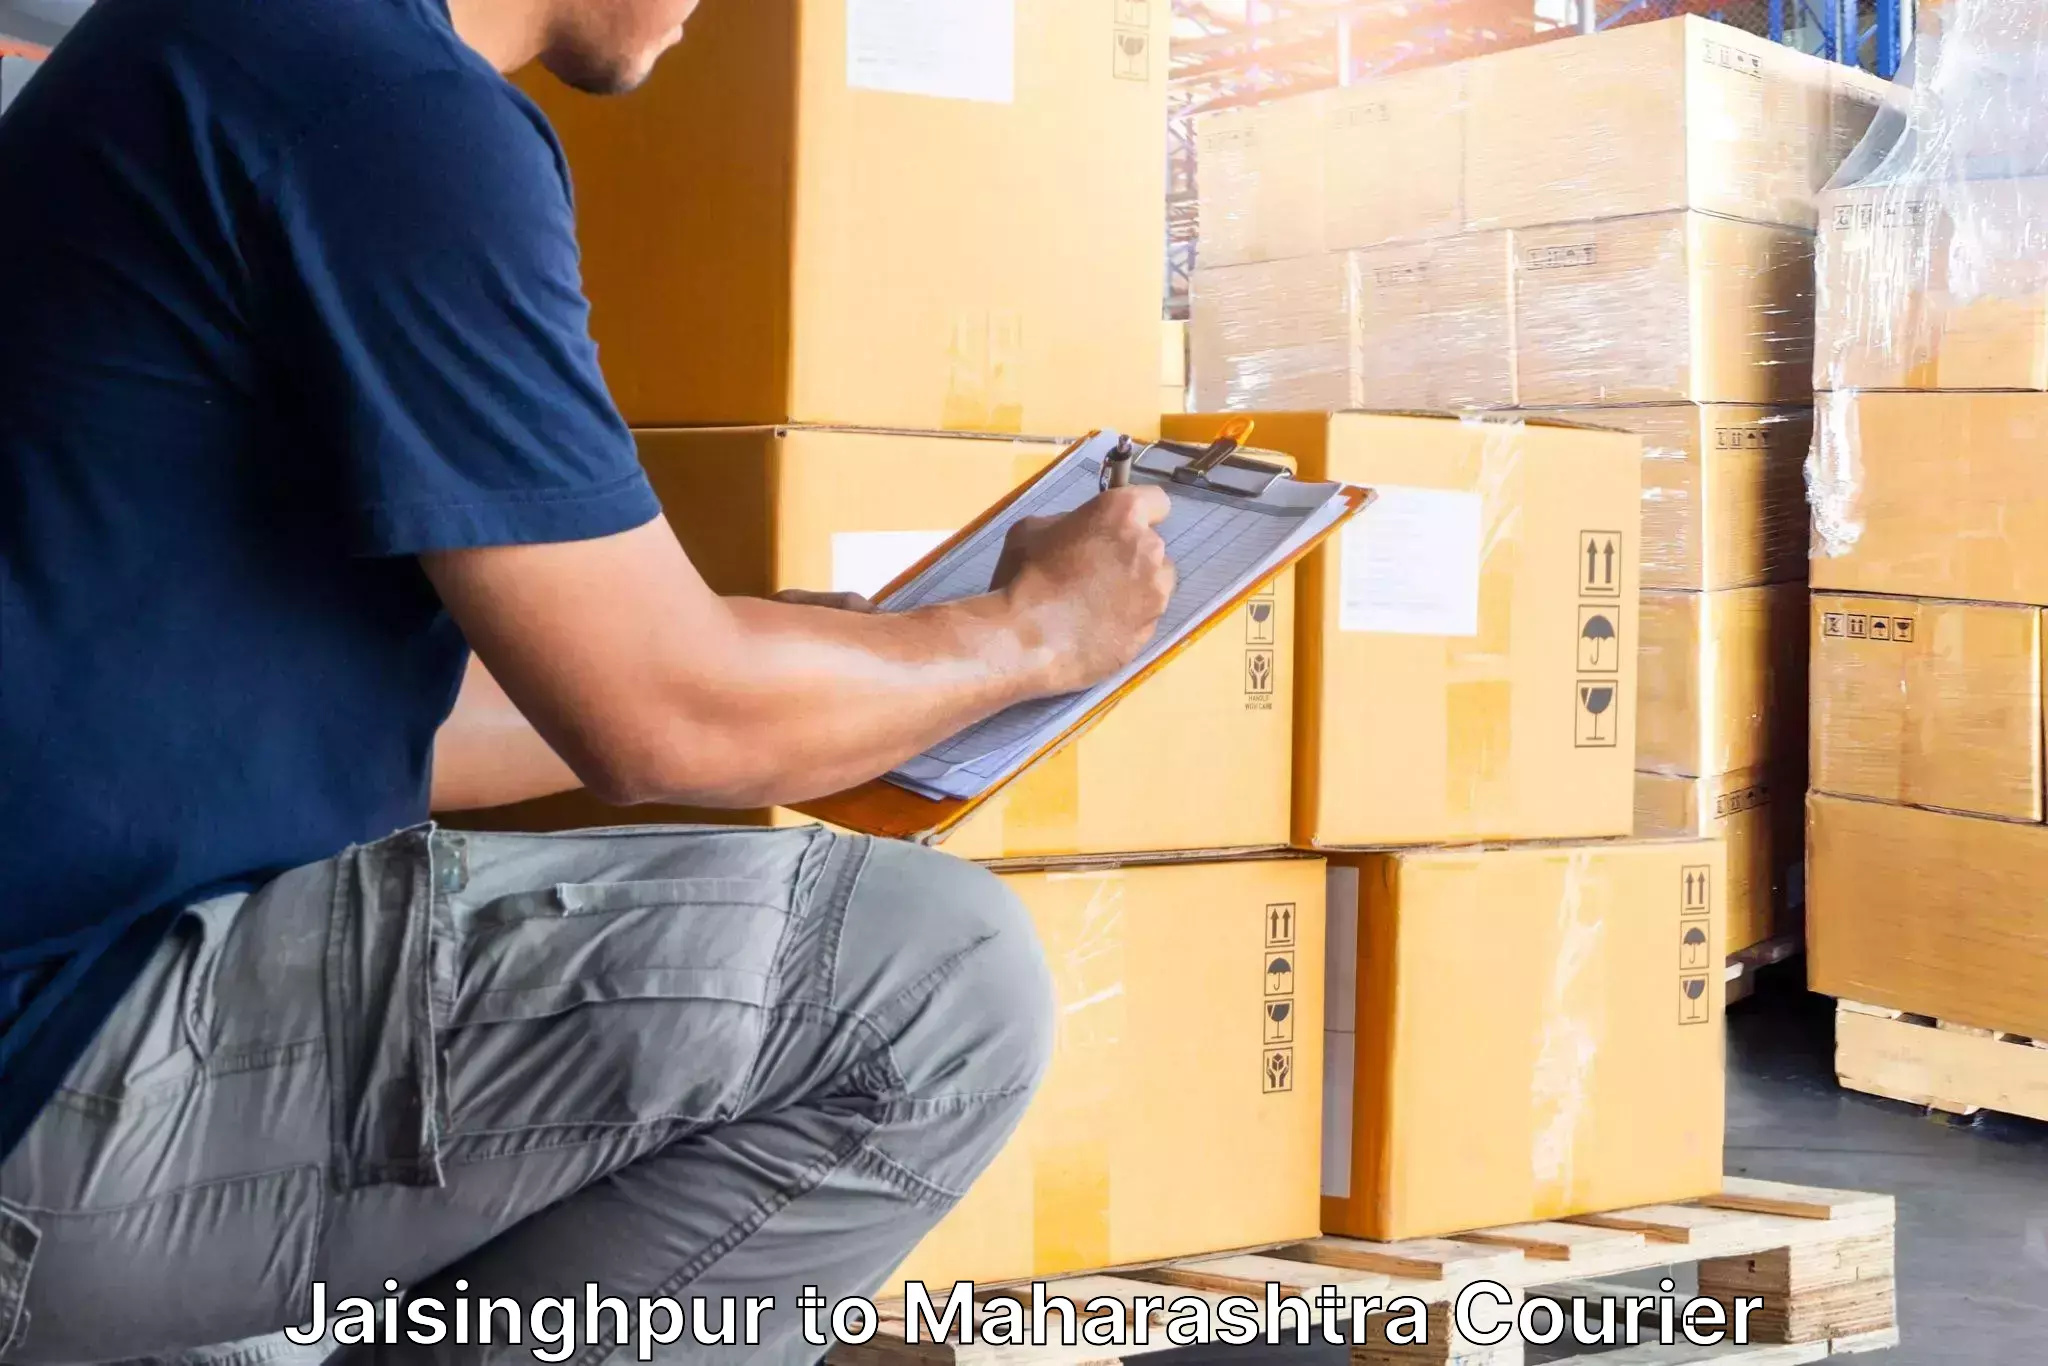 Furniture delivery service Jaisinghpur to Maharashtra